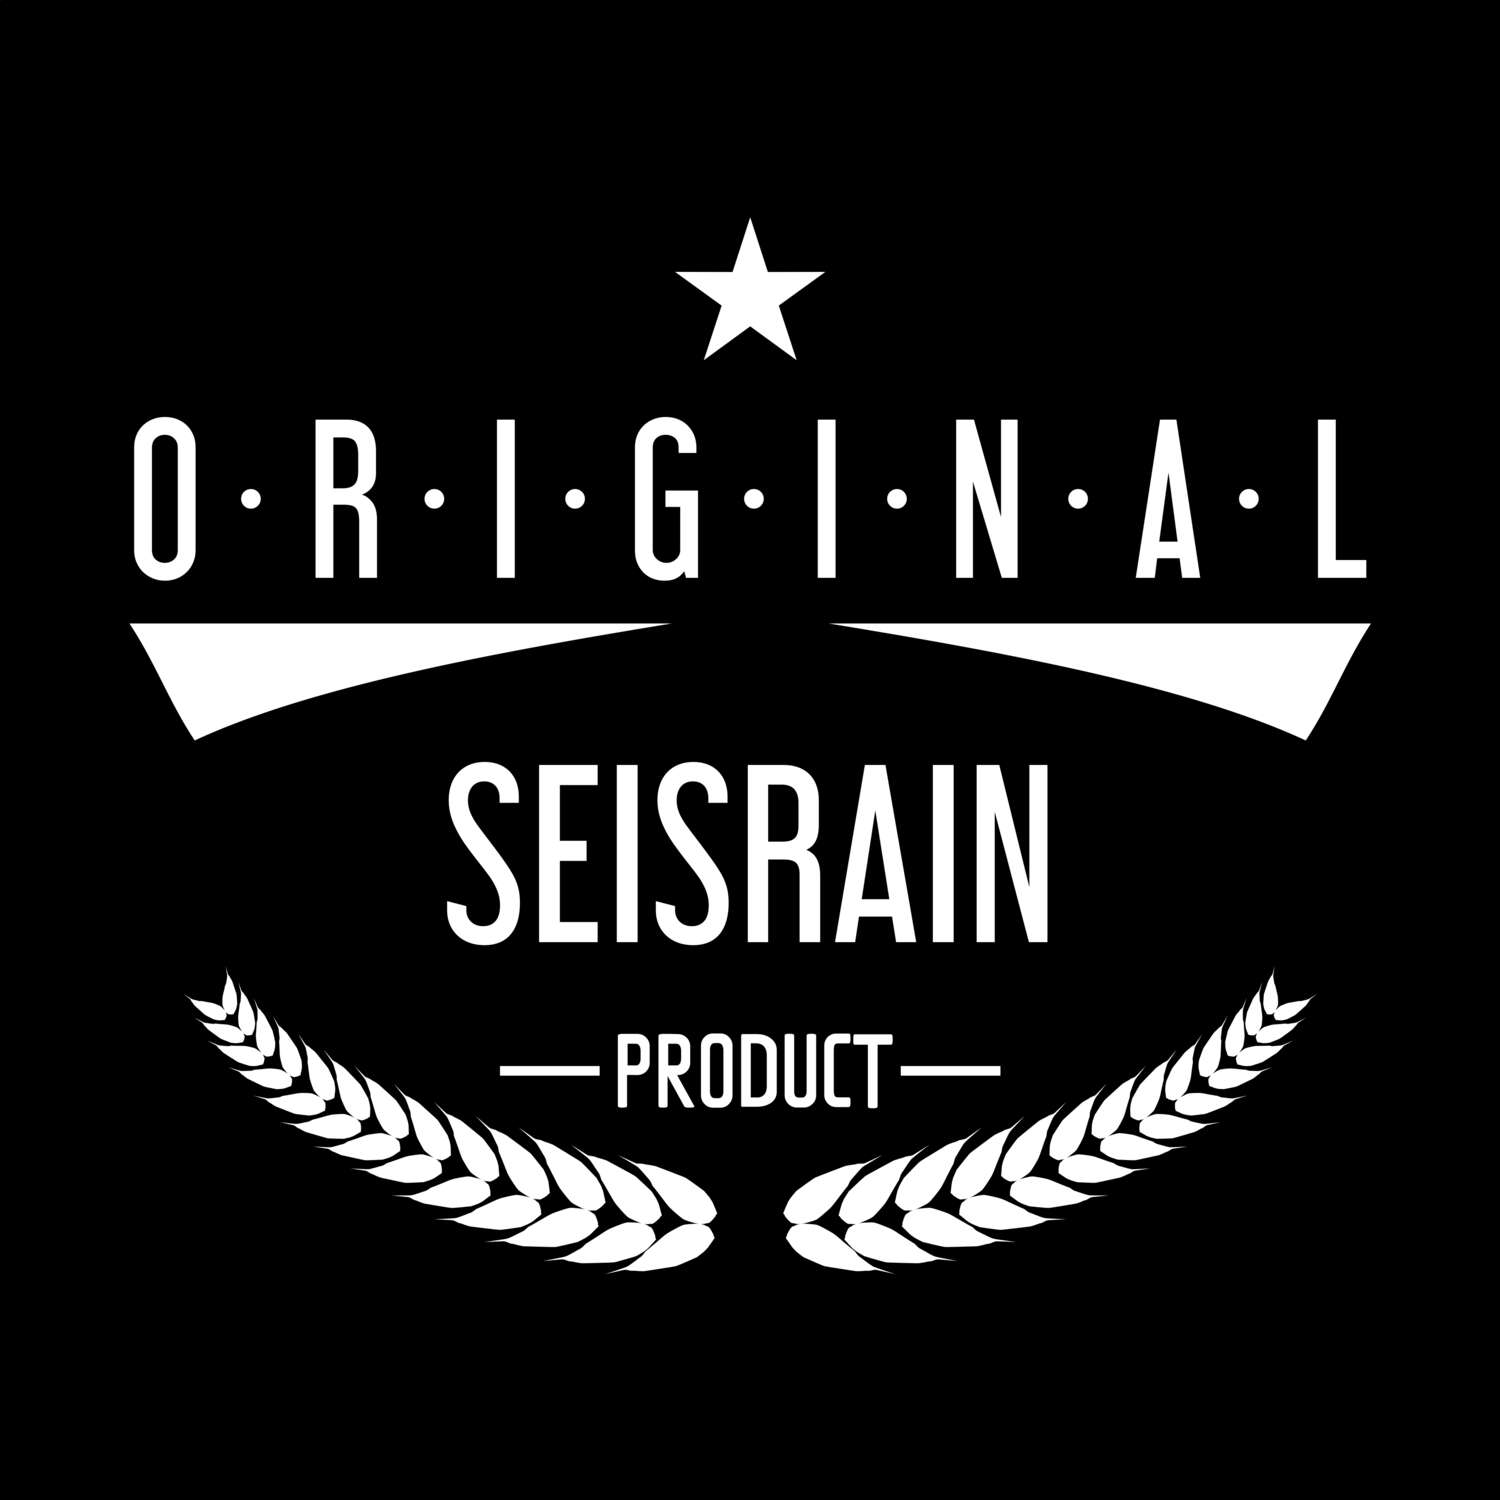 Seisrain T-Shirt »Original Product«